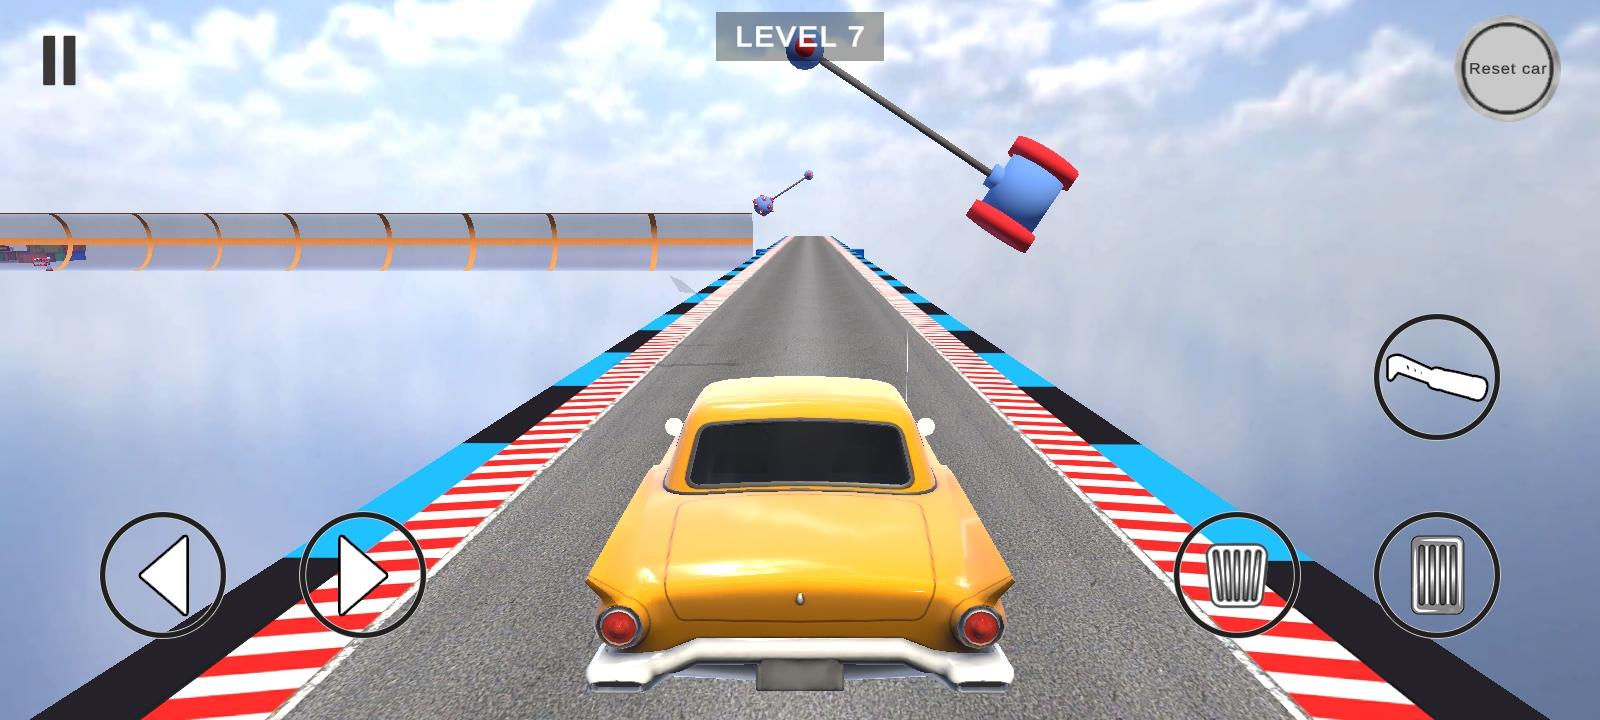 Jogos de Carros - Android Games